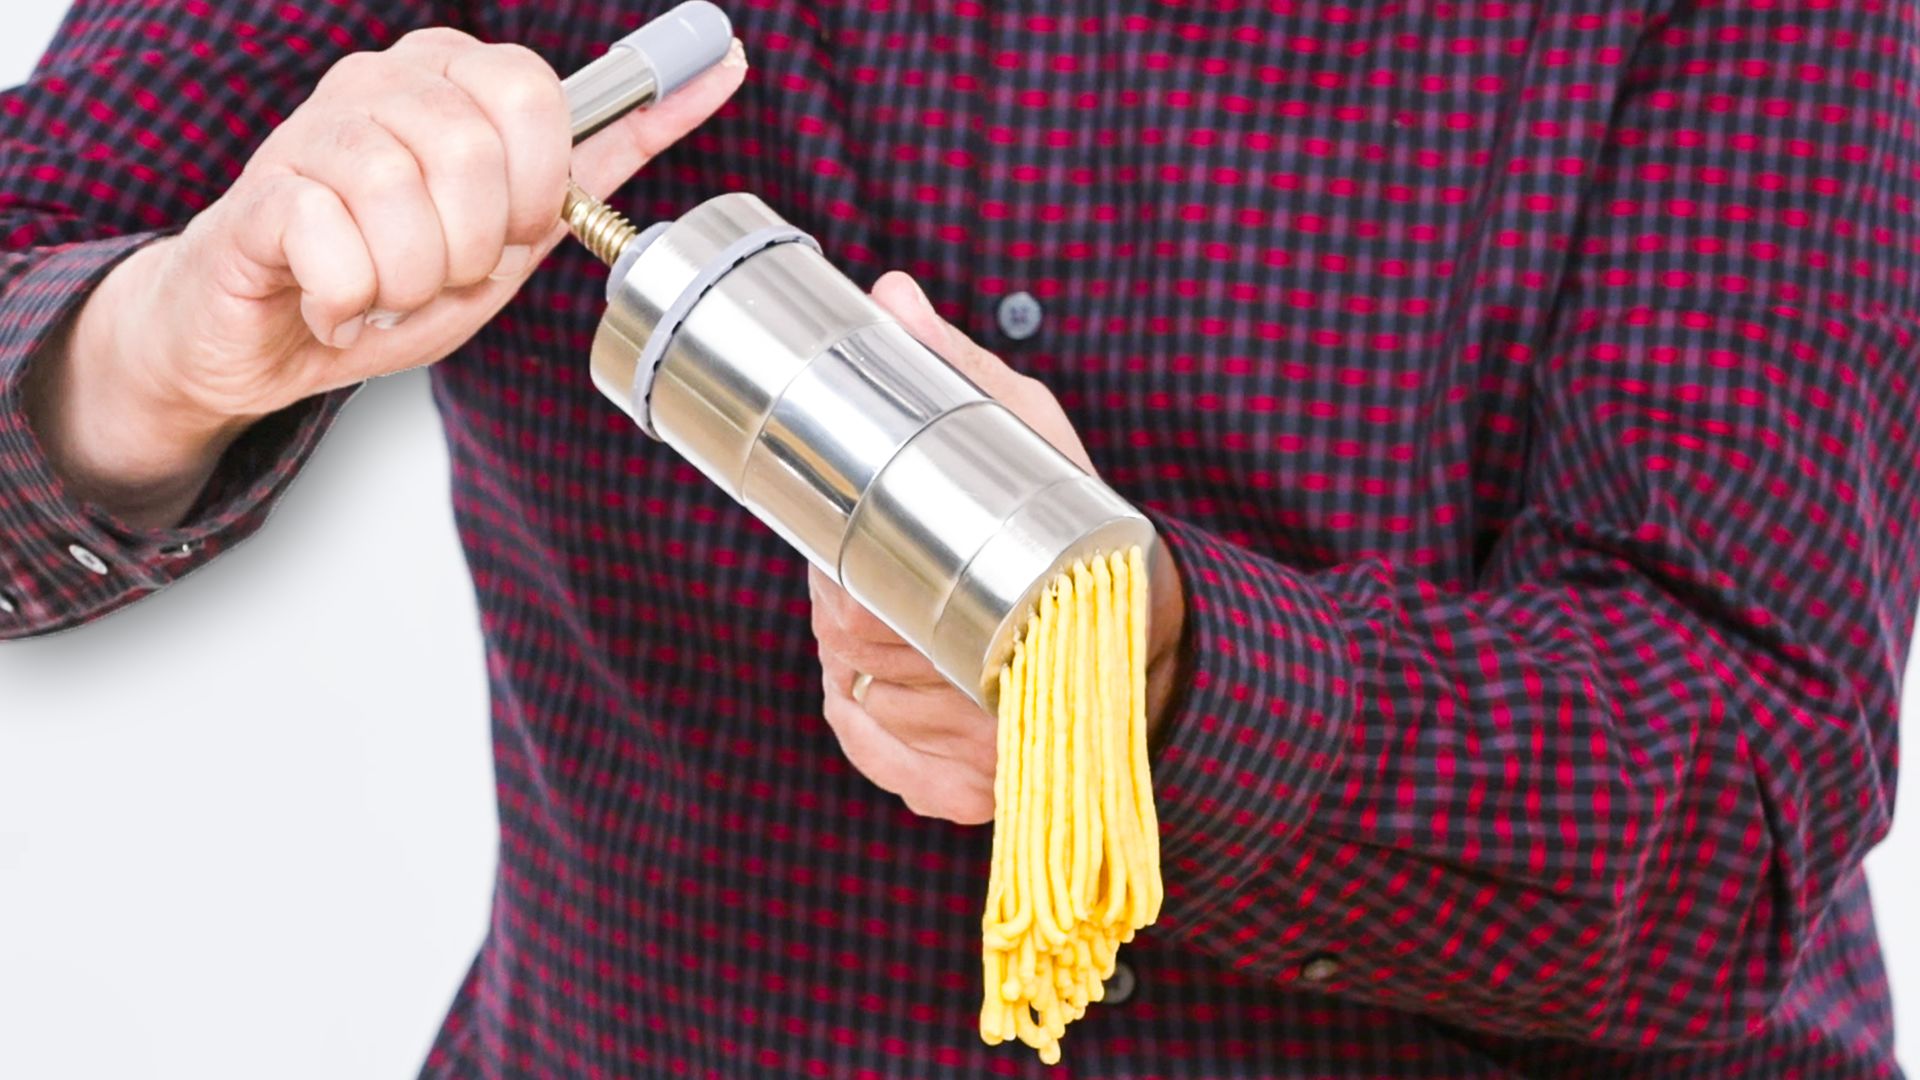 Design expert tests 5 pasta-making gadgets 